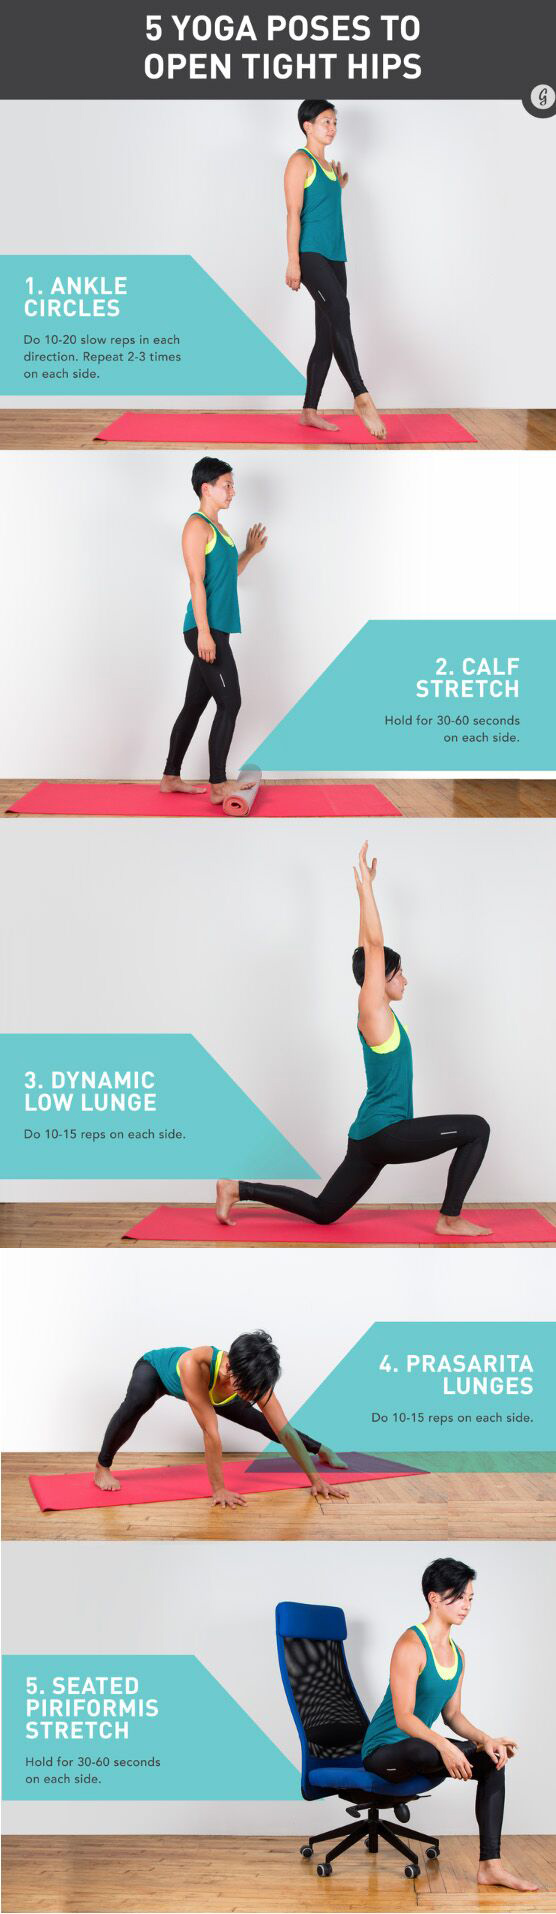 yoga-stretches